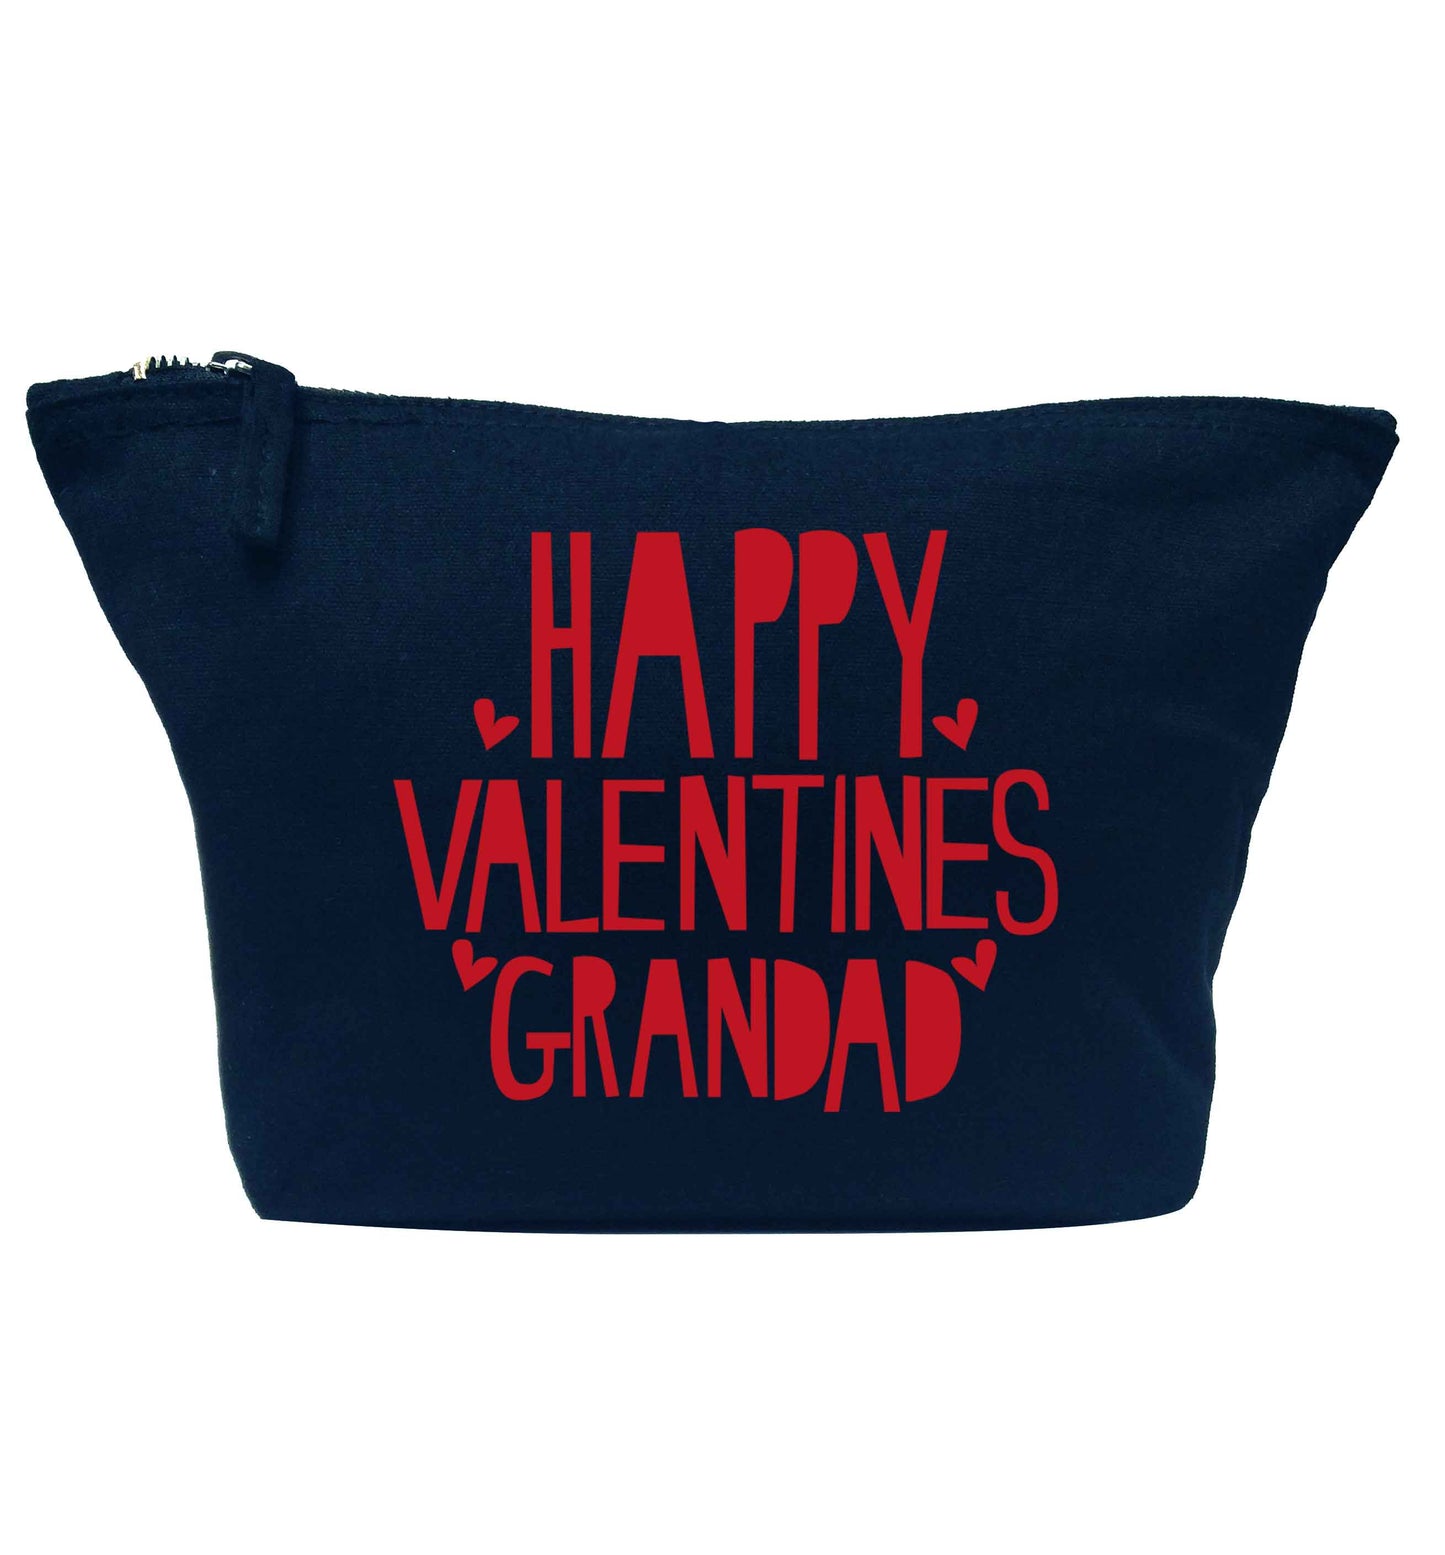 Happy valentines grandad navy makeup bag